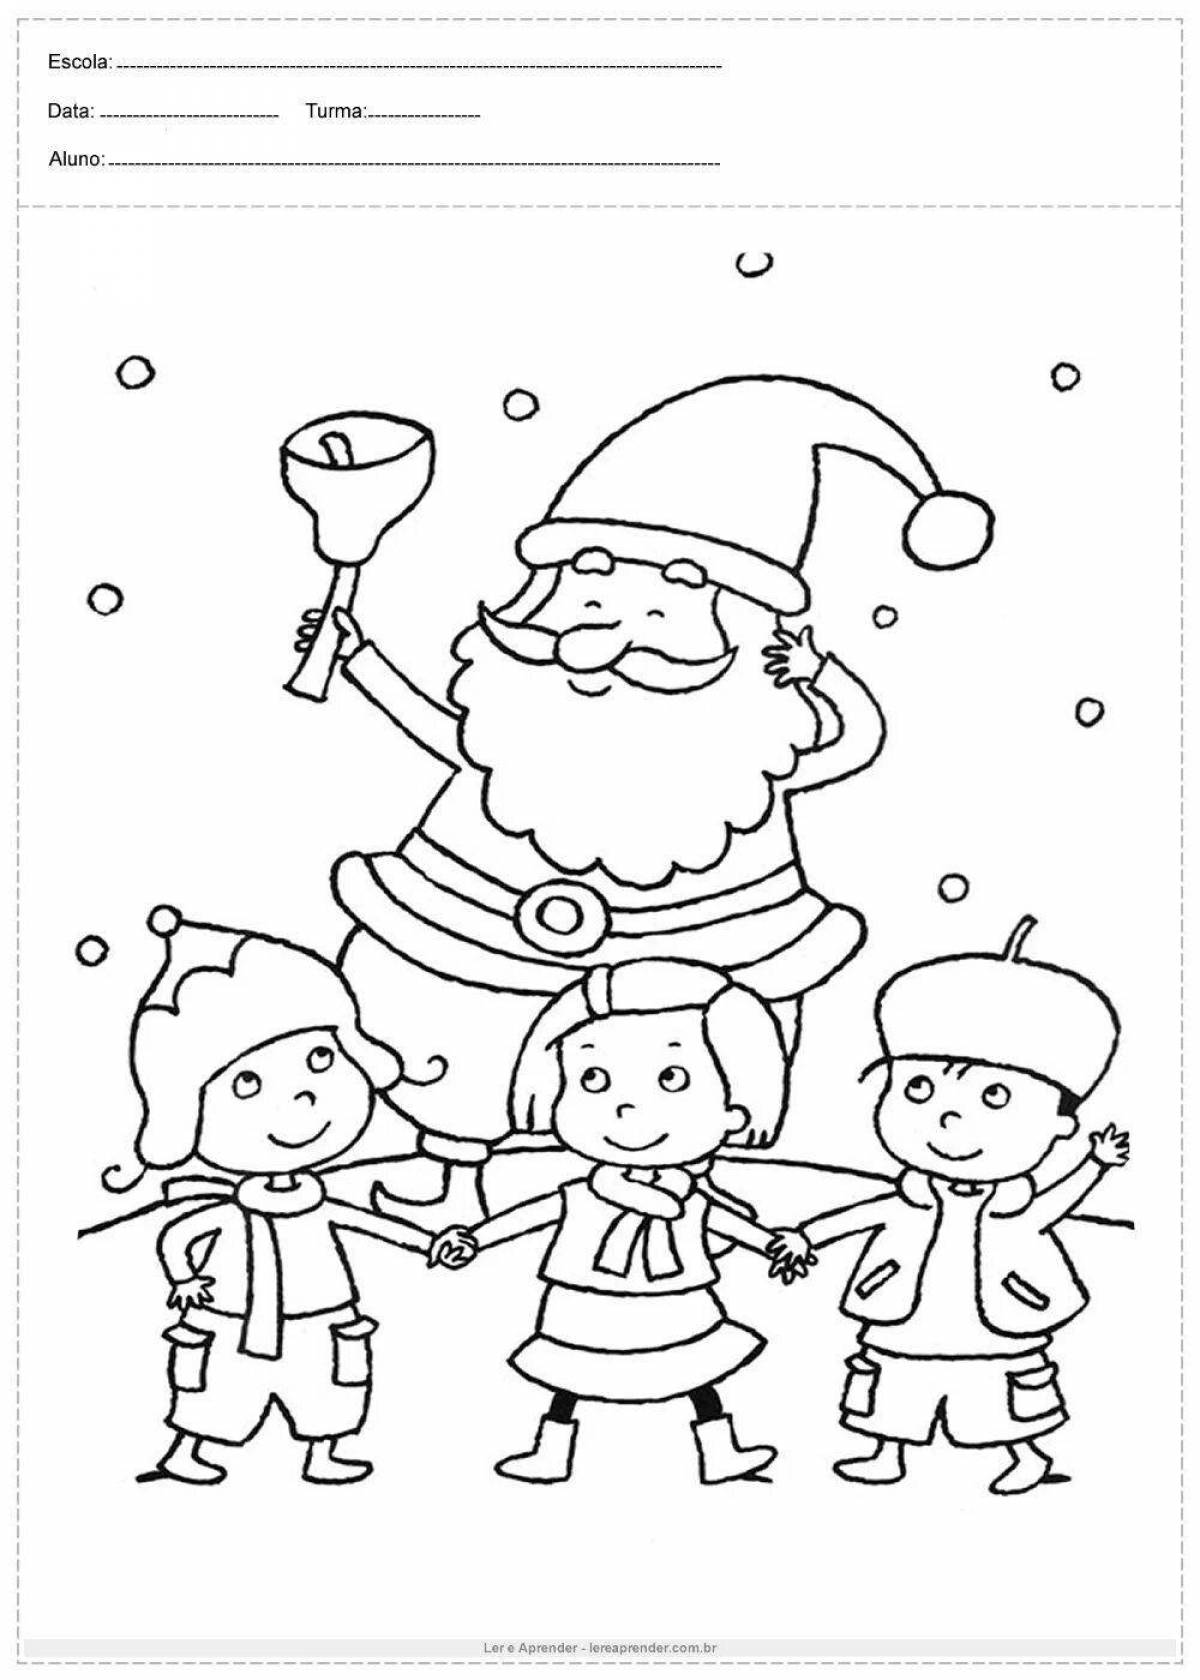 Glowing santa claus coloring page